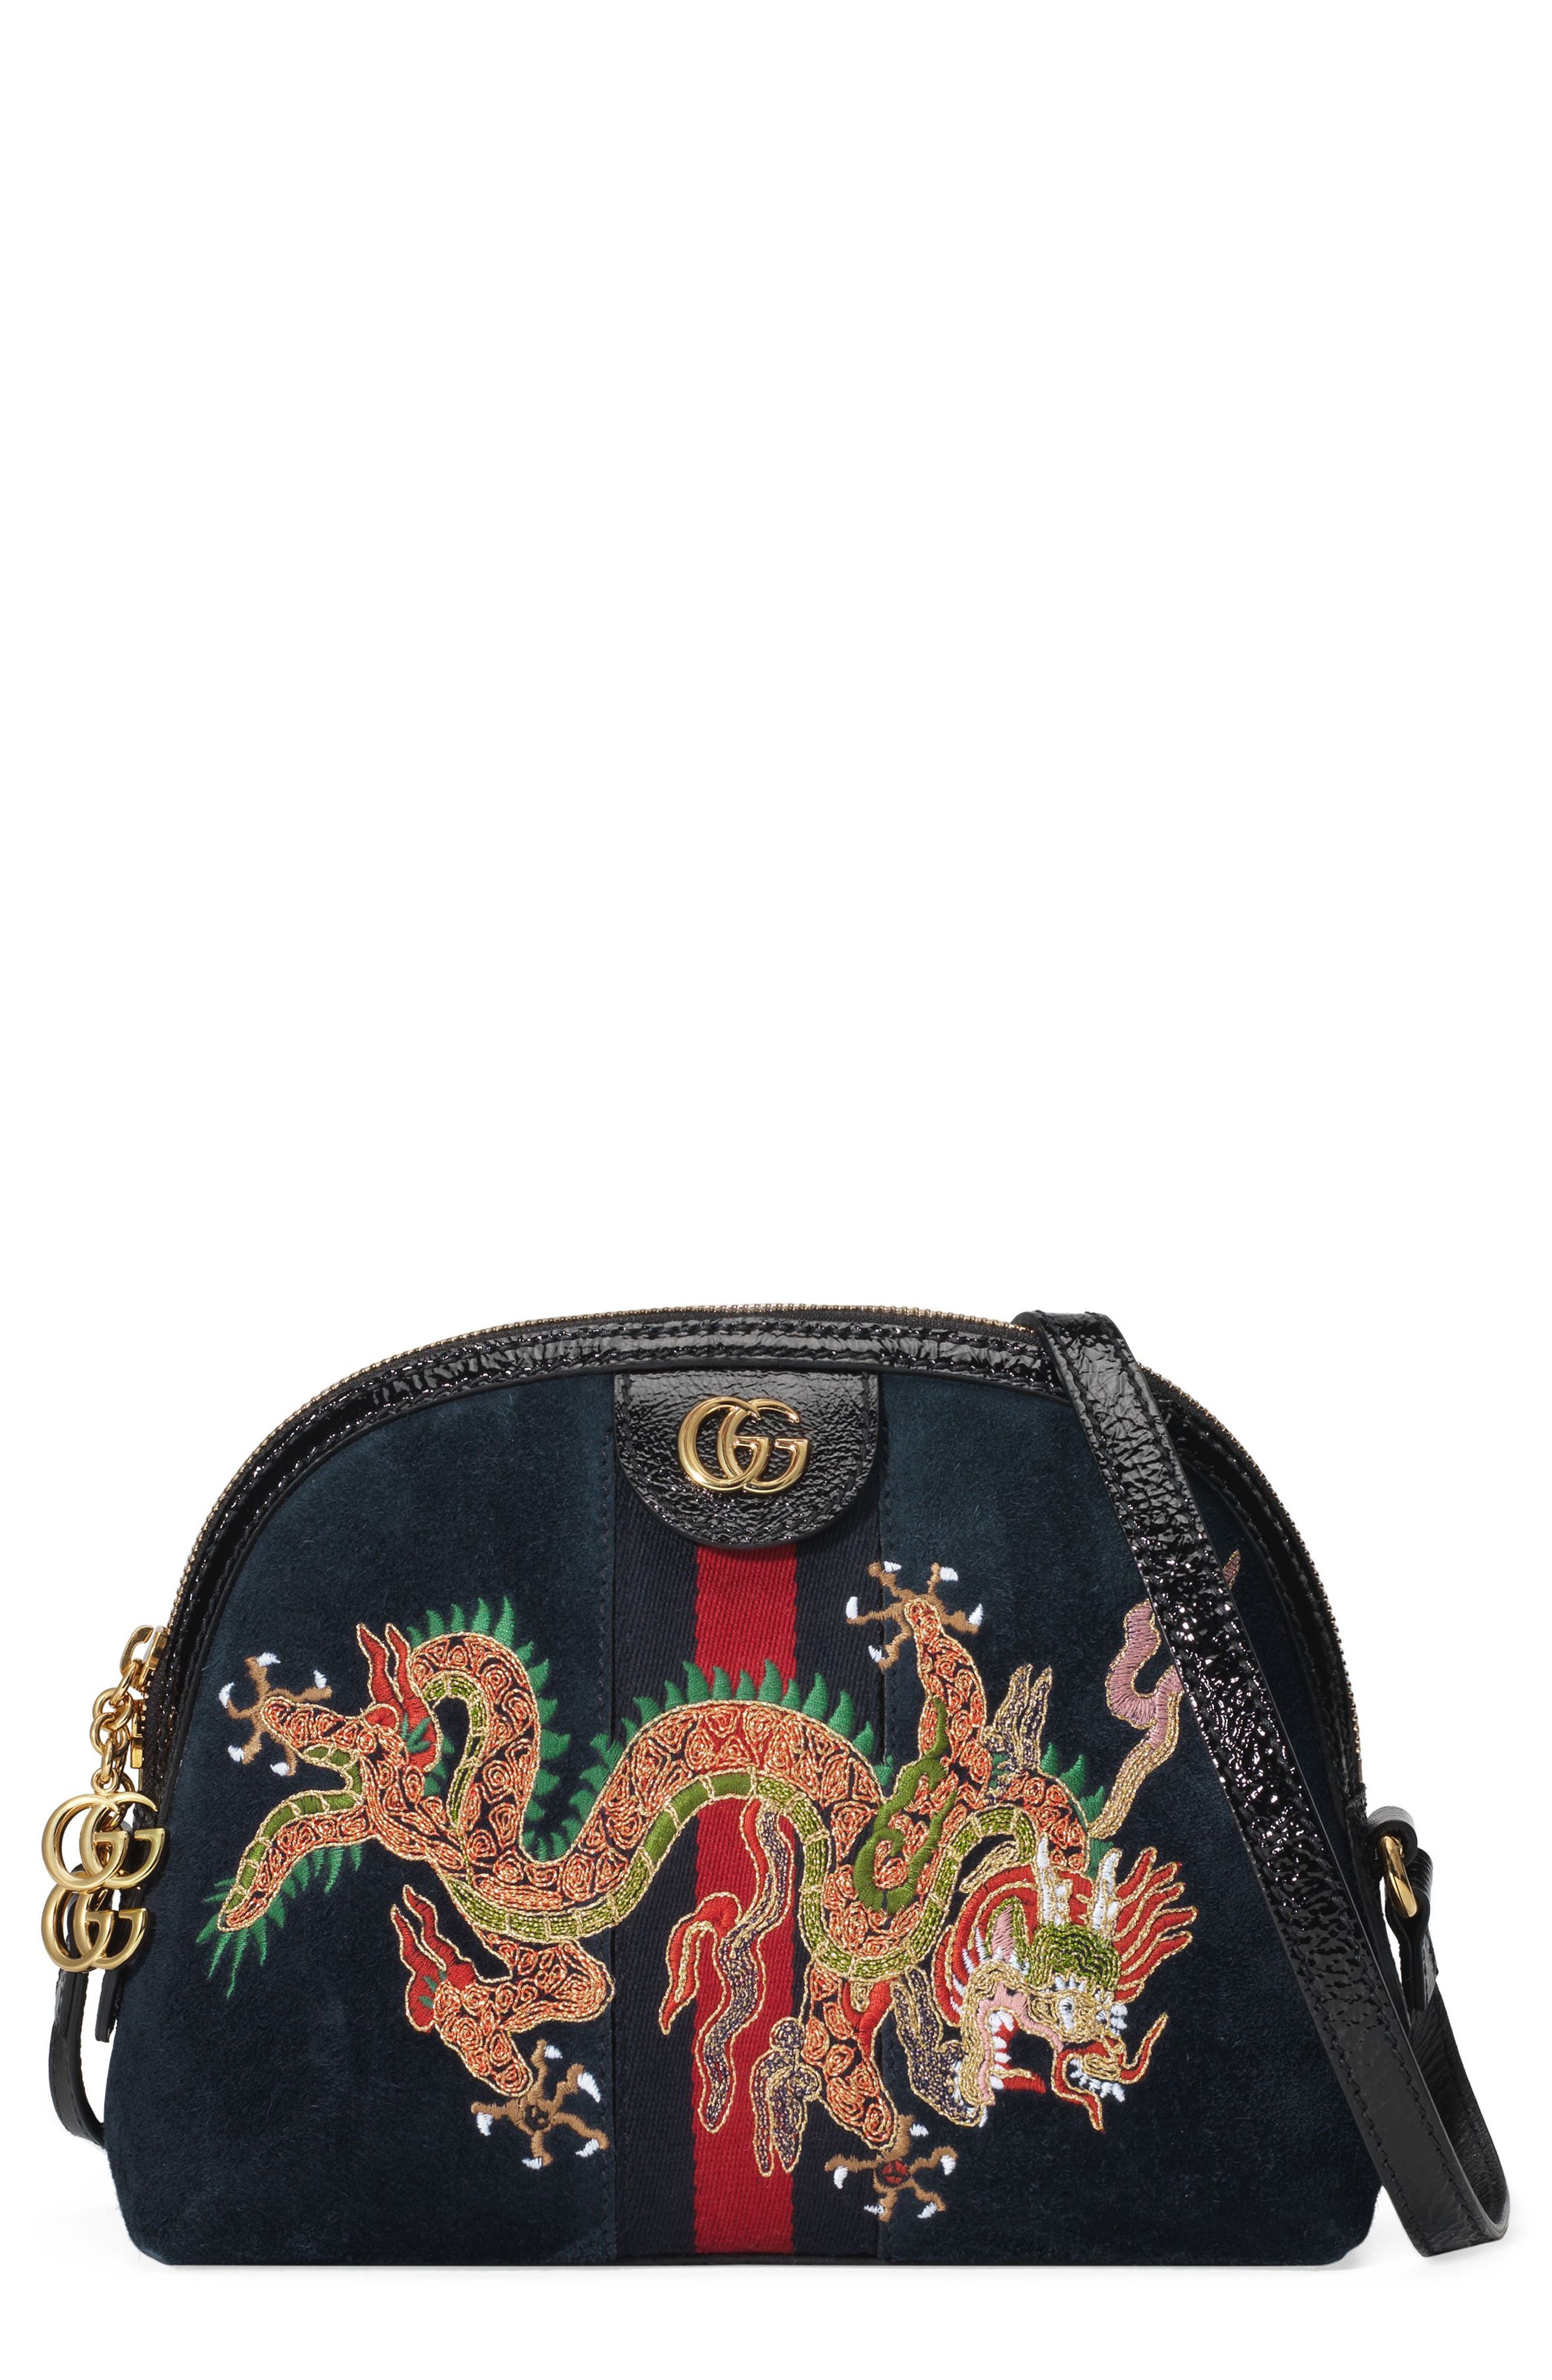 dragon gucci bag